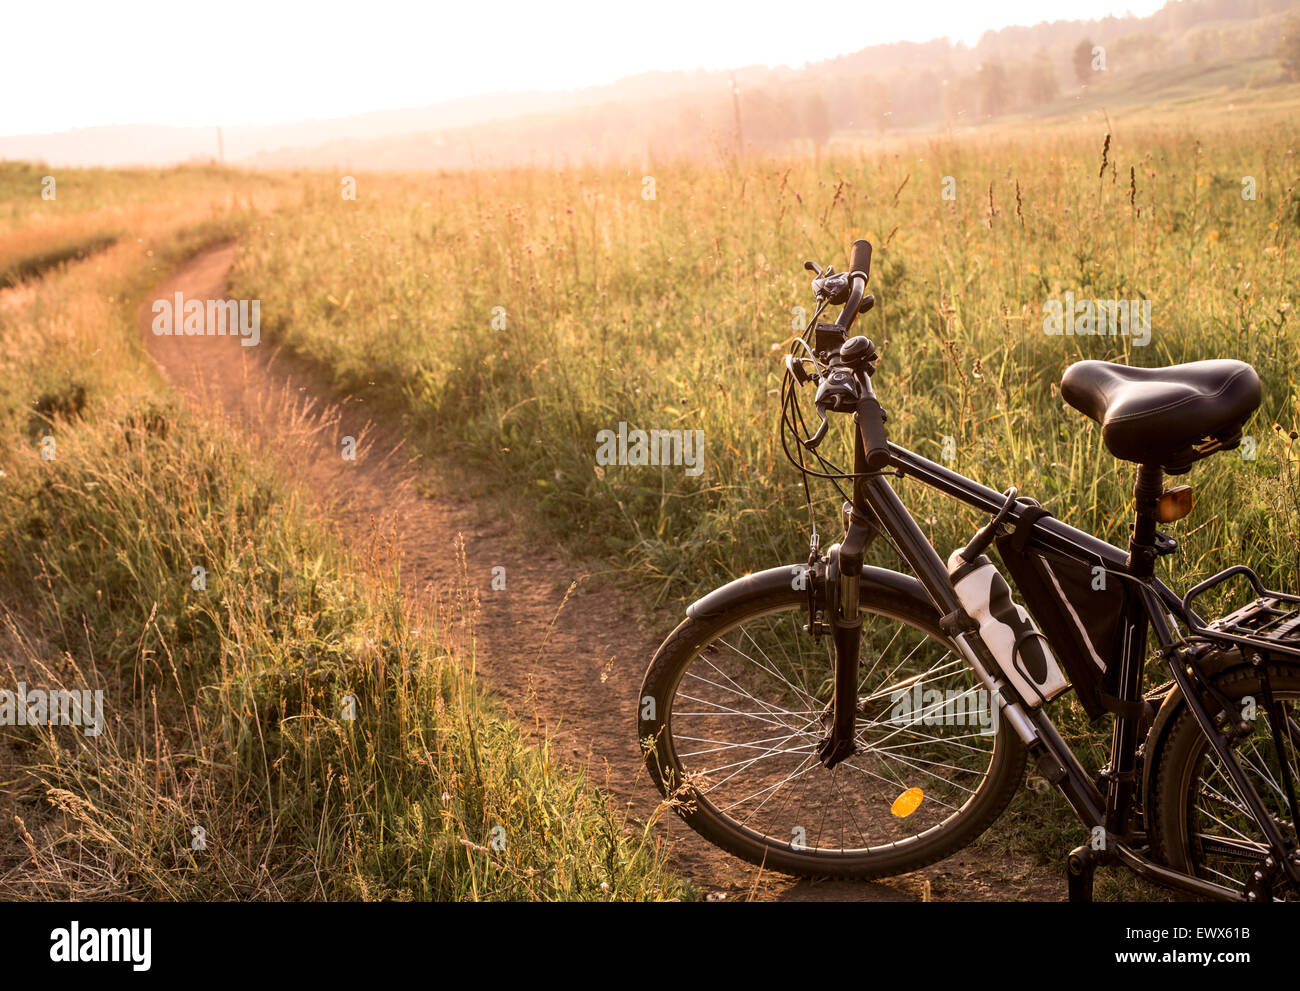 Black Country Fahrrad bei Sonnenaufgang oder Sonnenuntergang Stockfoto